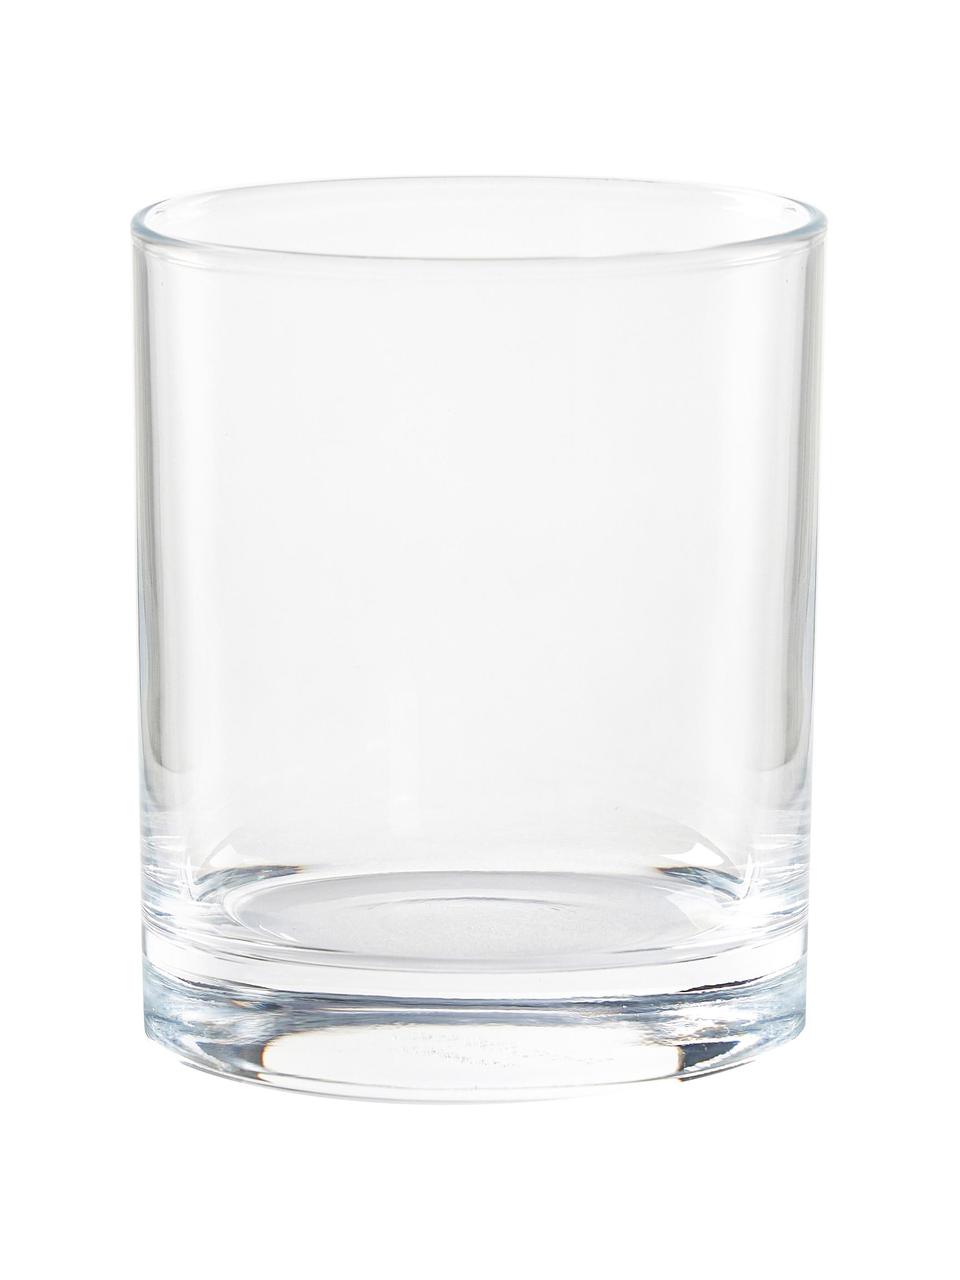 Bicchiere whisky Princesa 6 pz, Vetro, Trasparente, Ø 8 x Alt. 9 cm, 310 ml